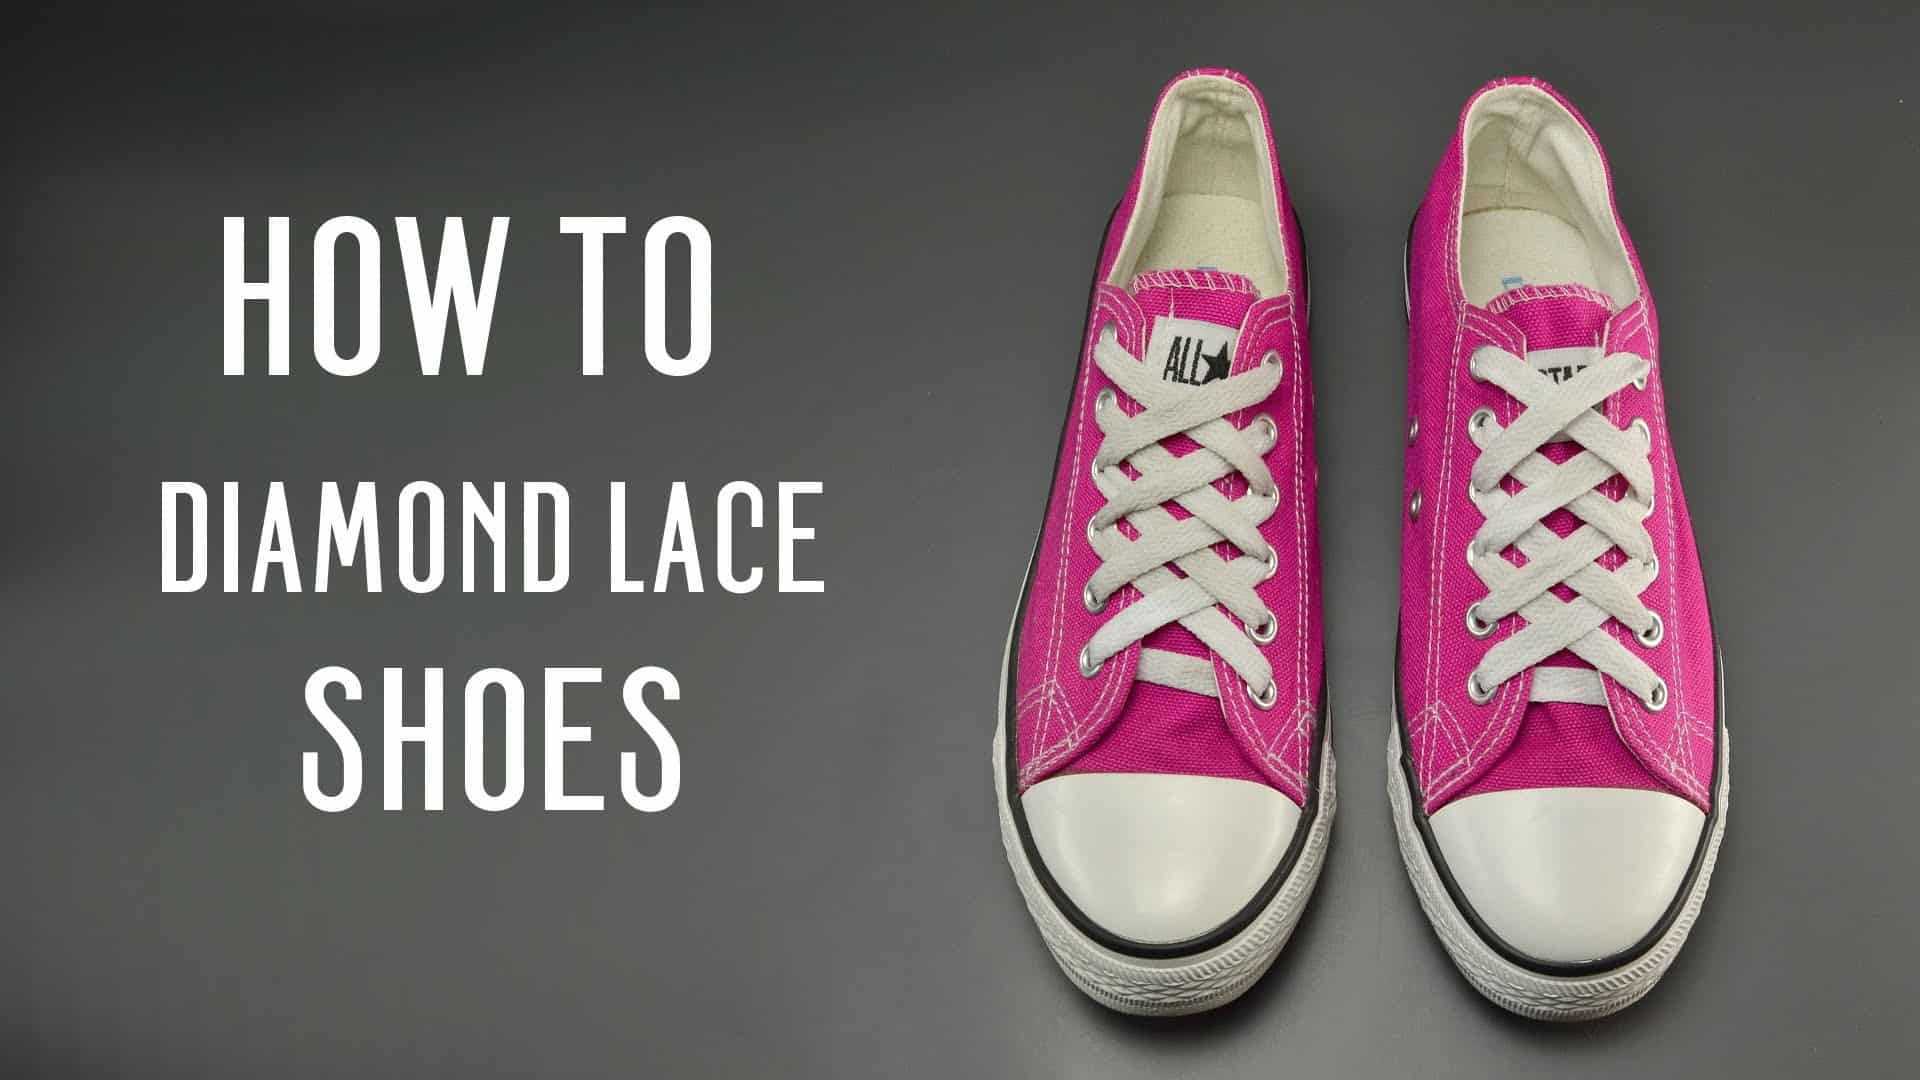 lace shoes ways diamond converse lacing vans shoe shoelace creative tutorial tie shoelaces laces tying different tutorials simple instruction learn